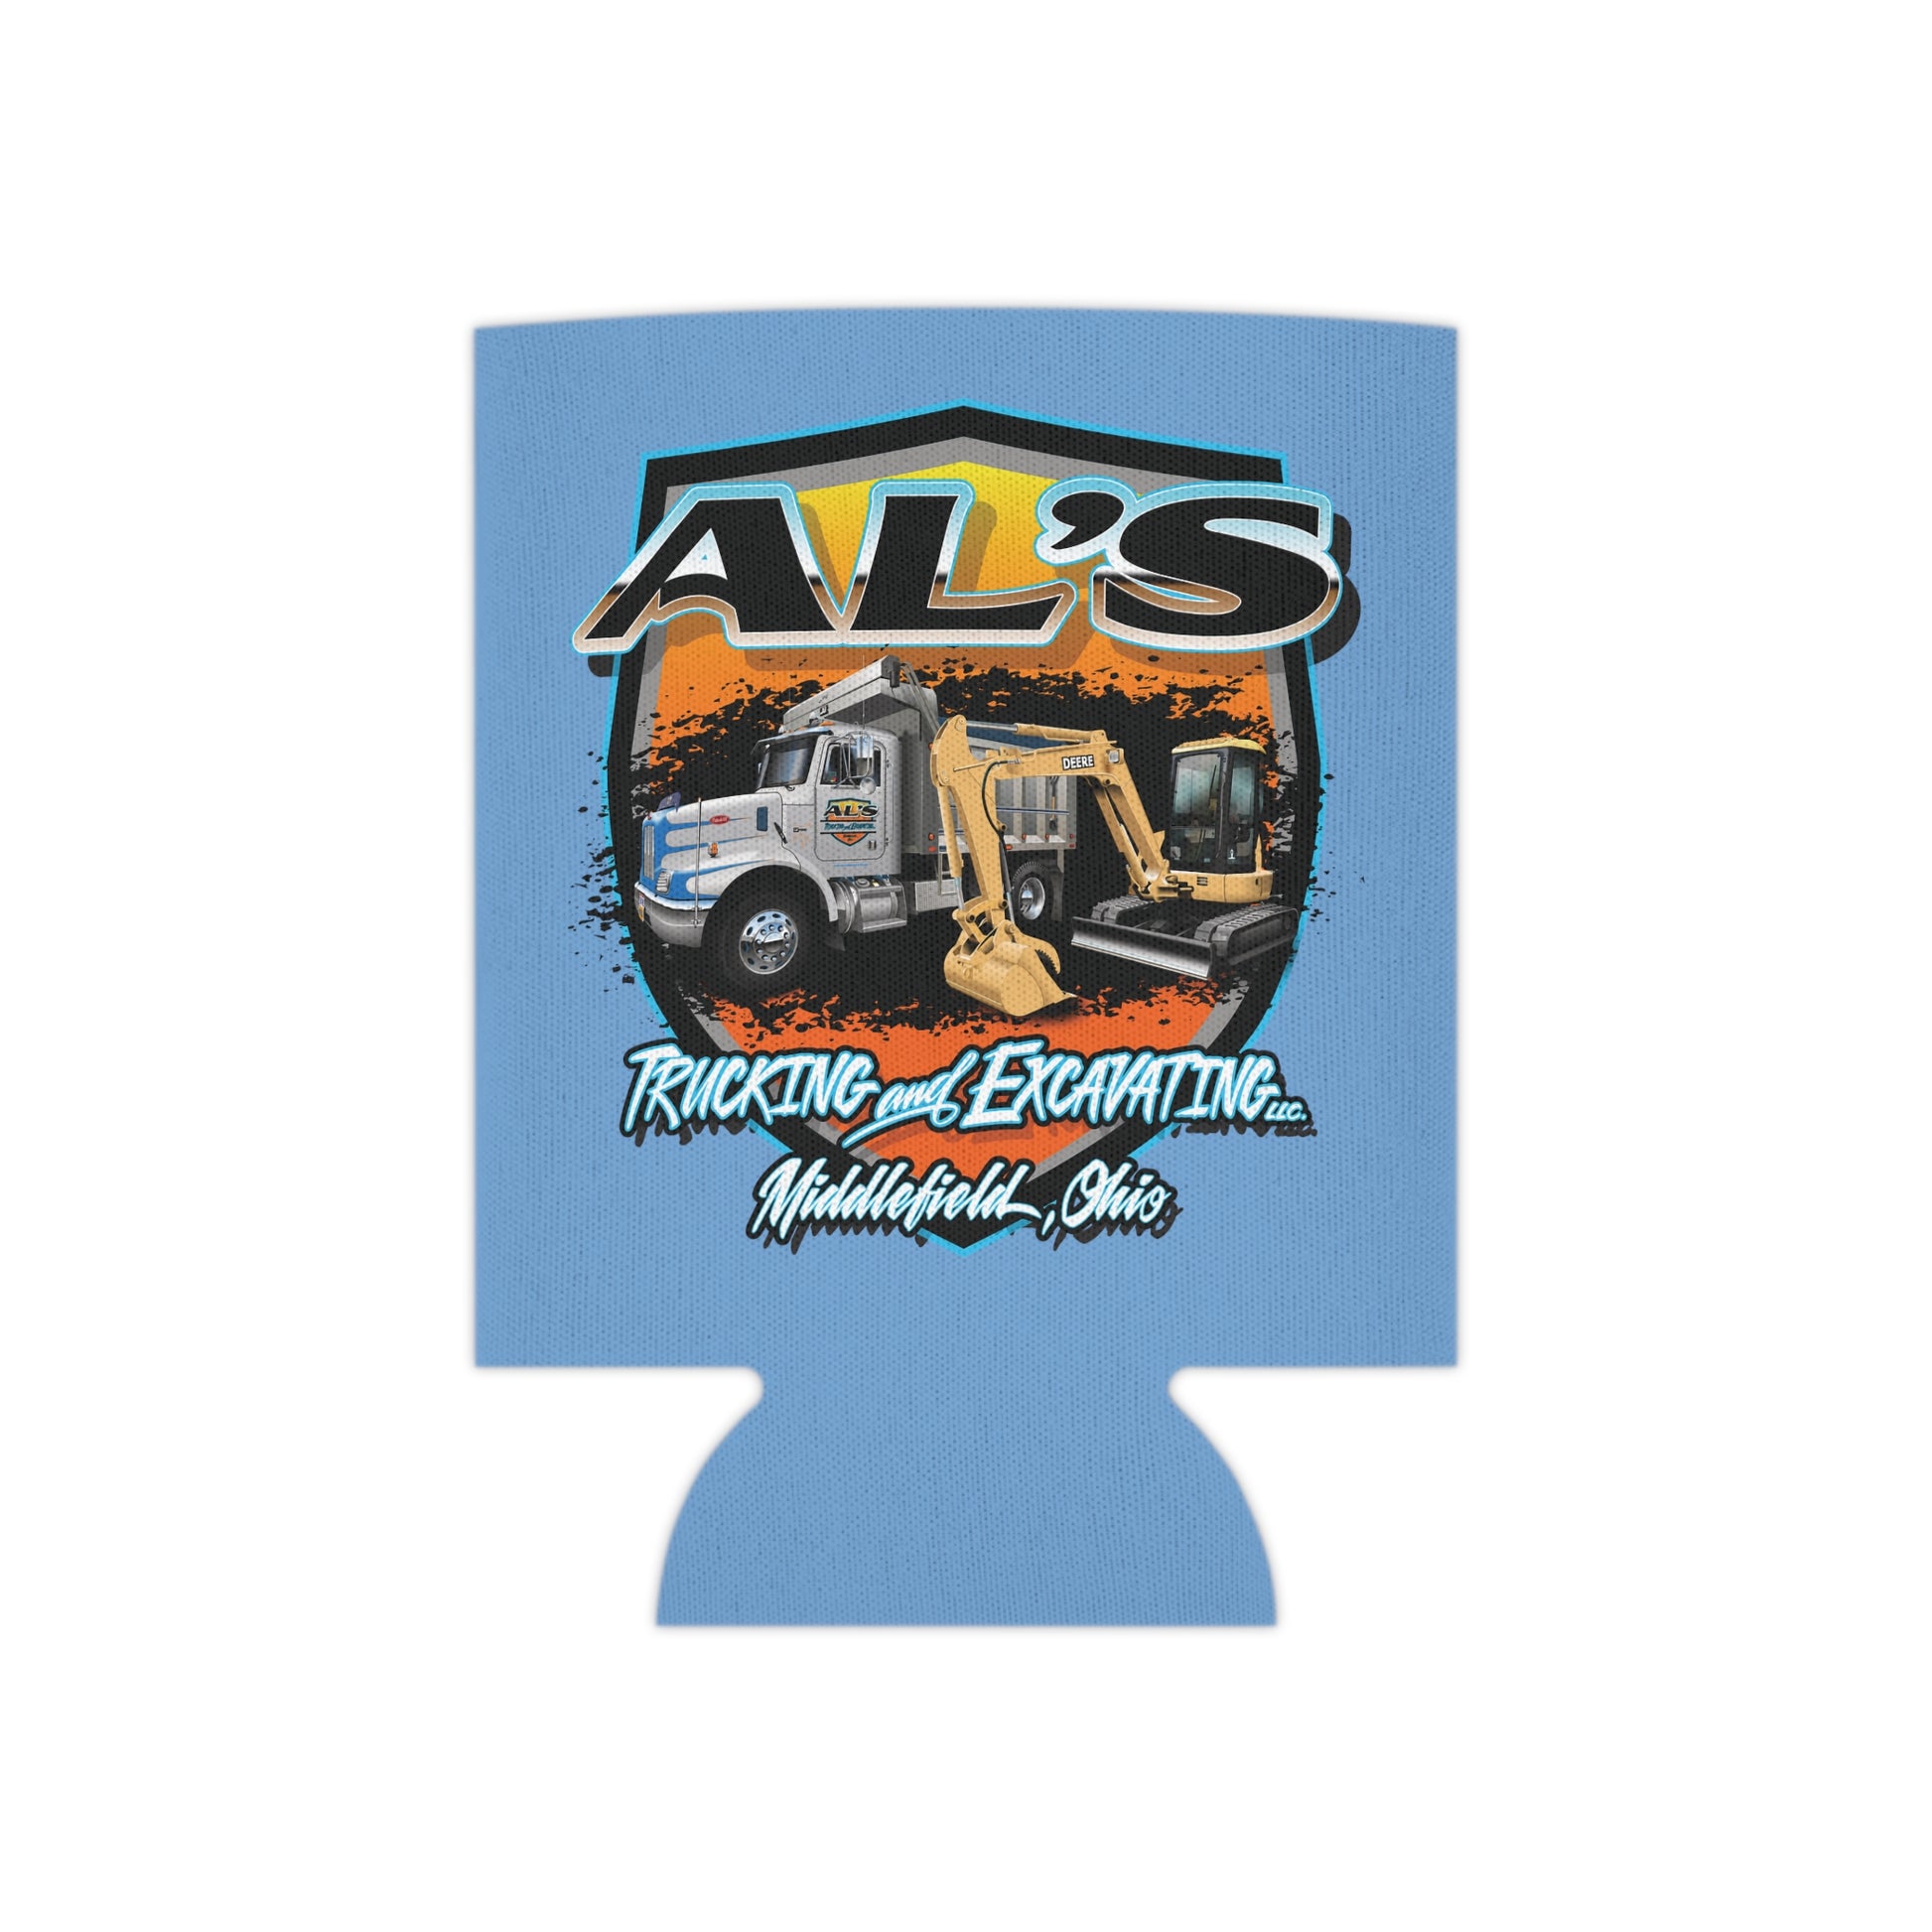 Al's Trucking and Excavating - Can Coolers - Regular / Slim - OCDandApparel